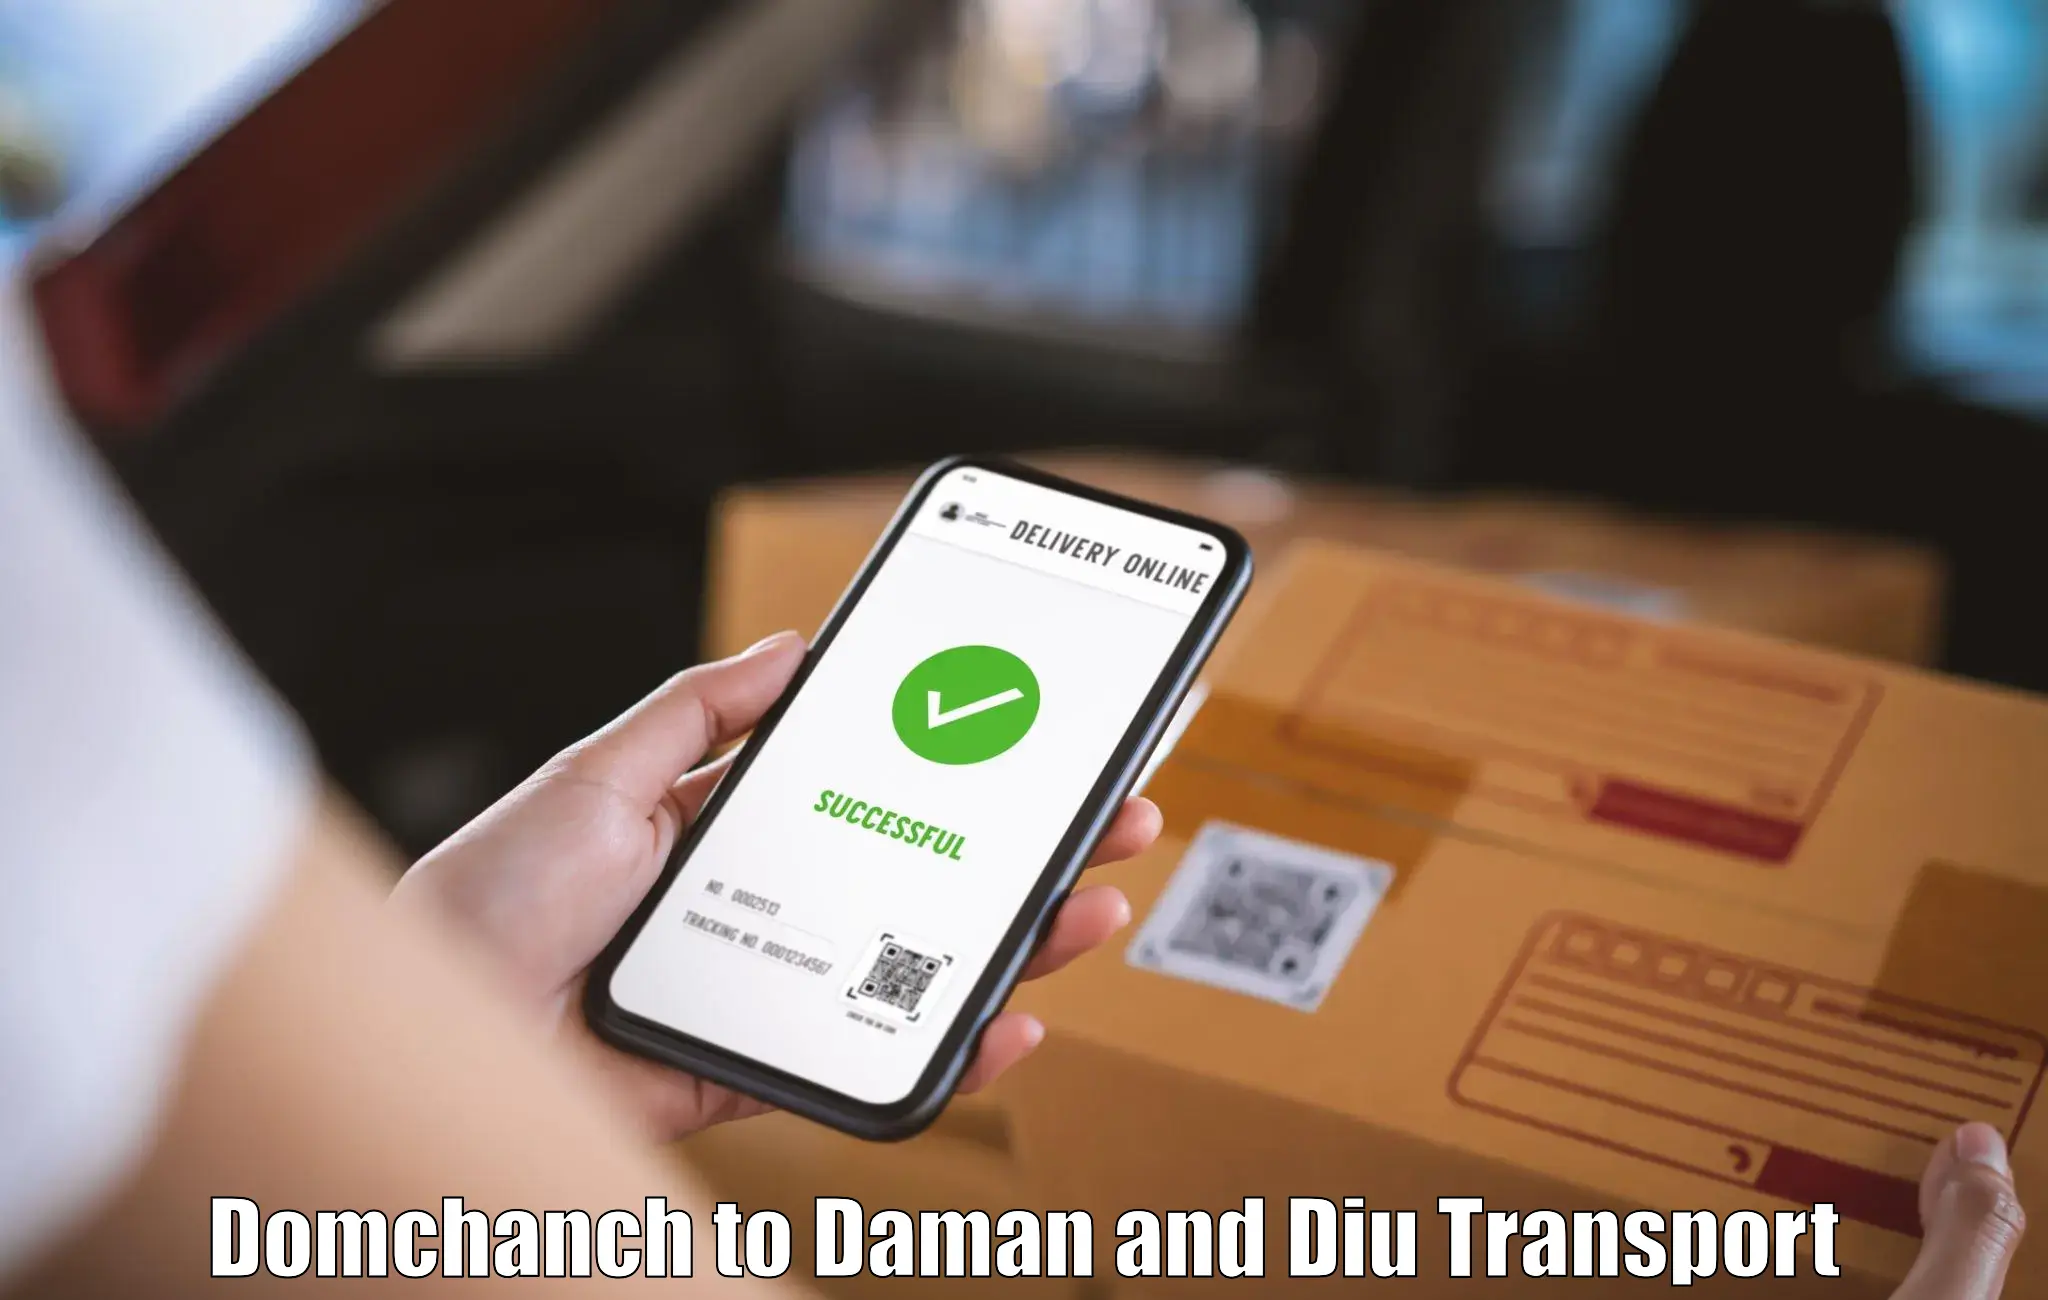 Shipping partner Domchanch to Daman and Diu